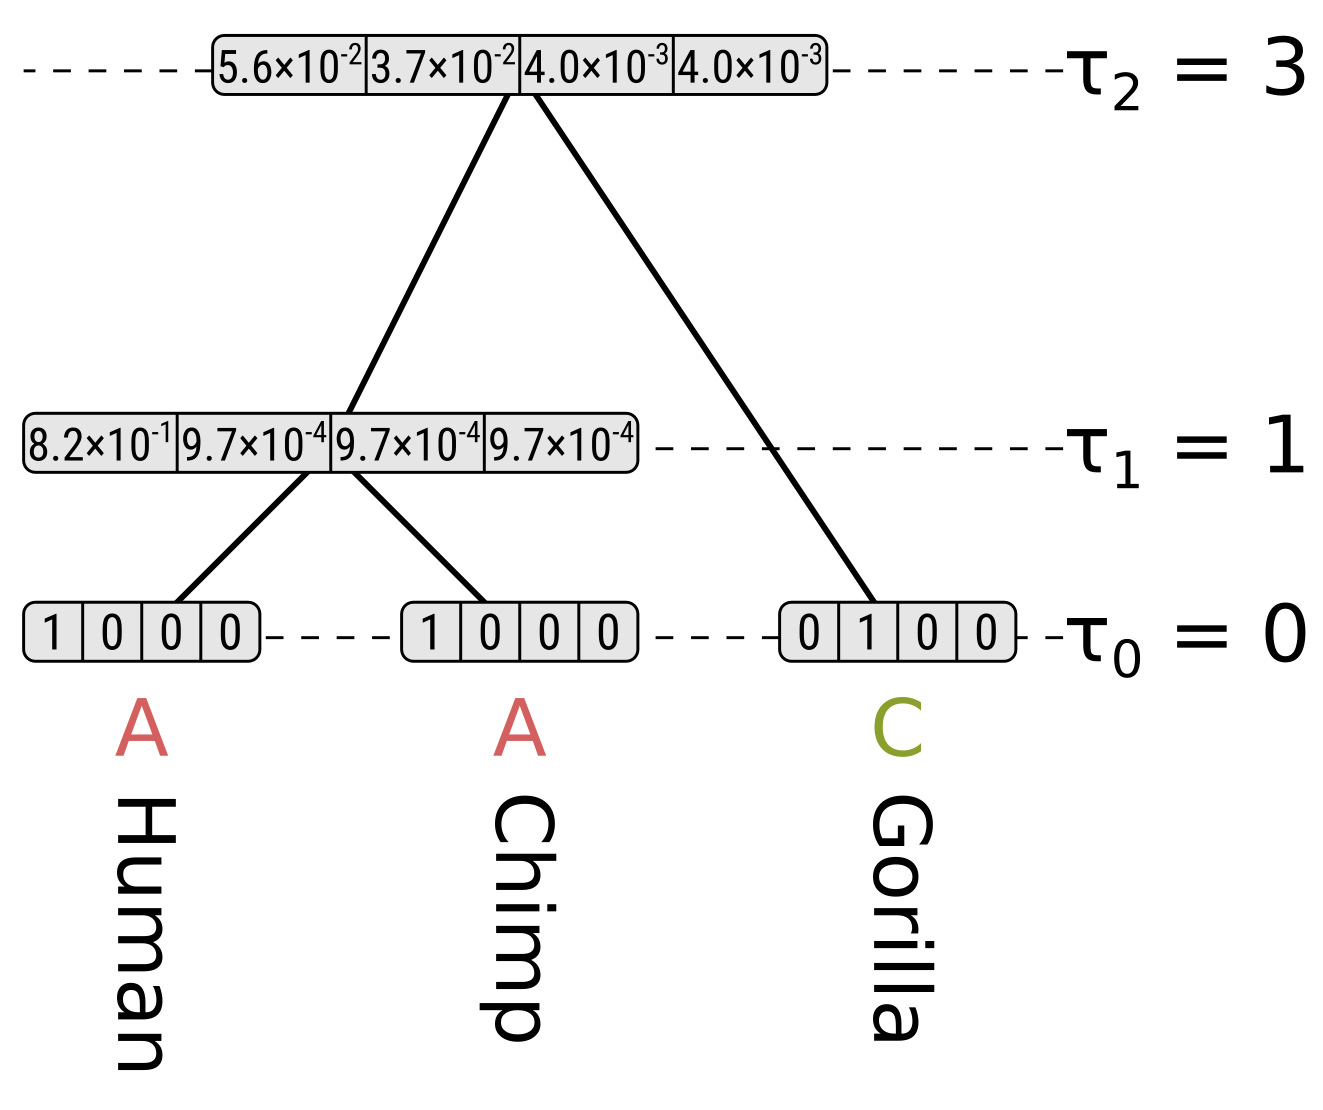 Root state partial likelihoods